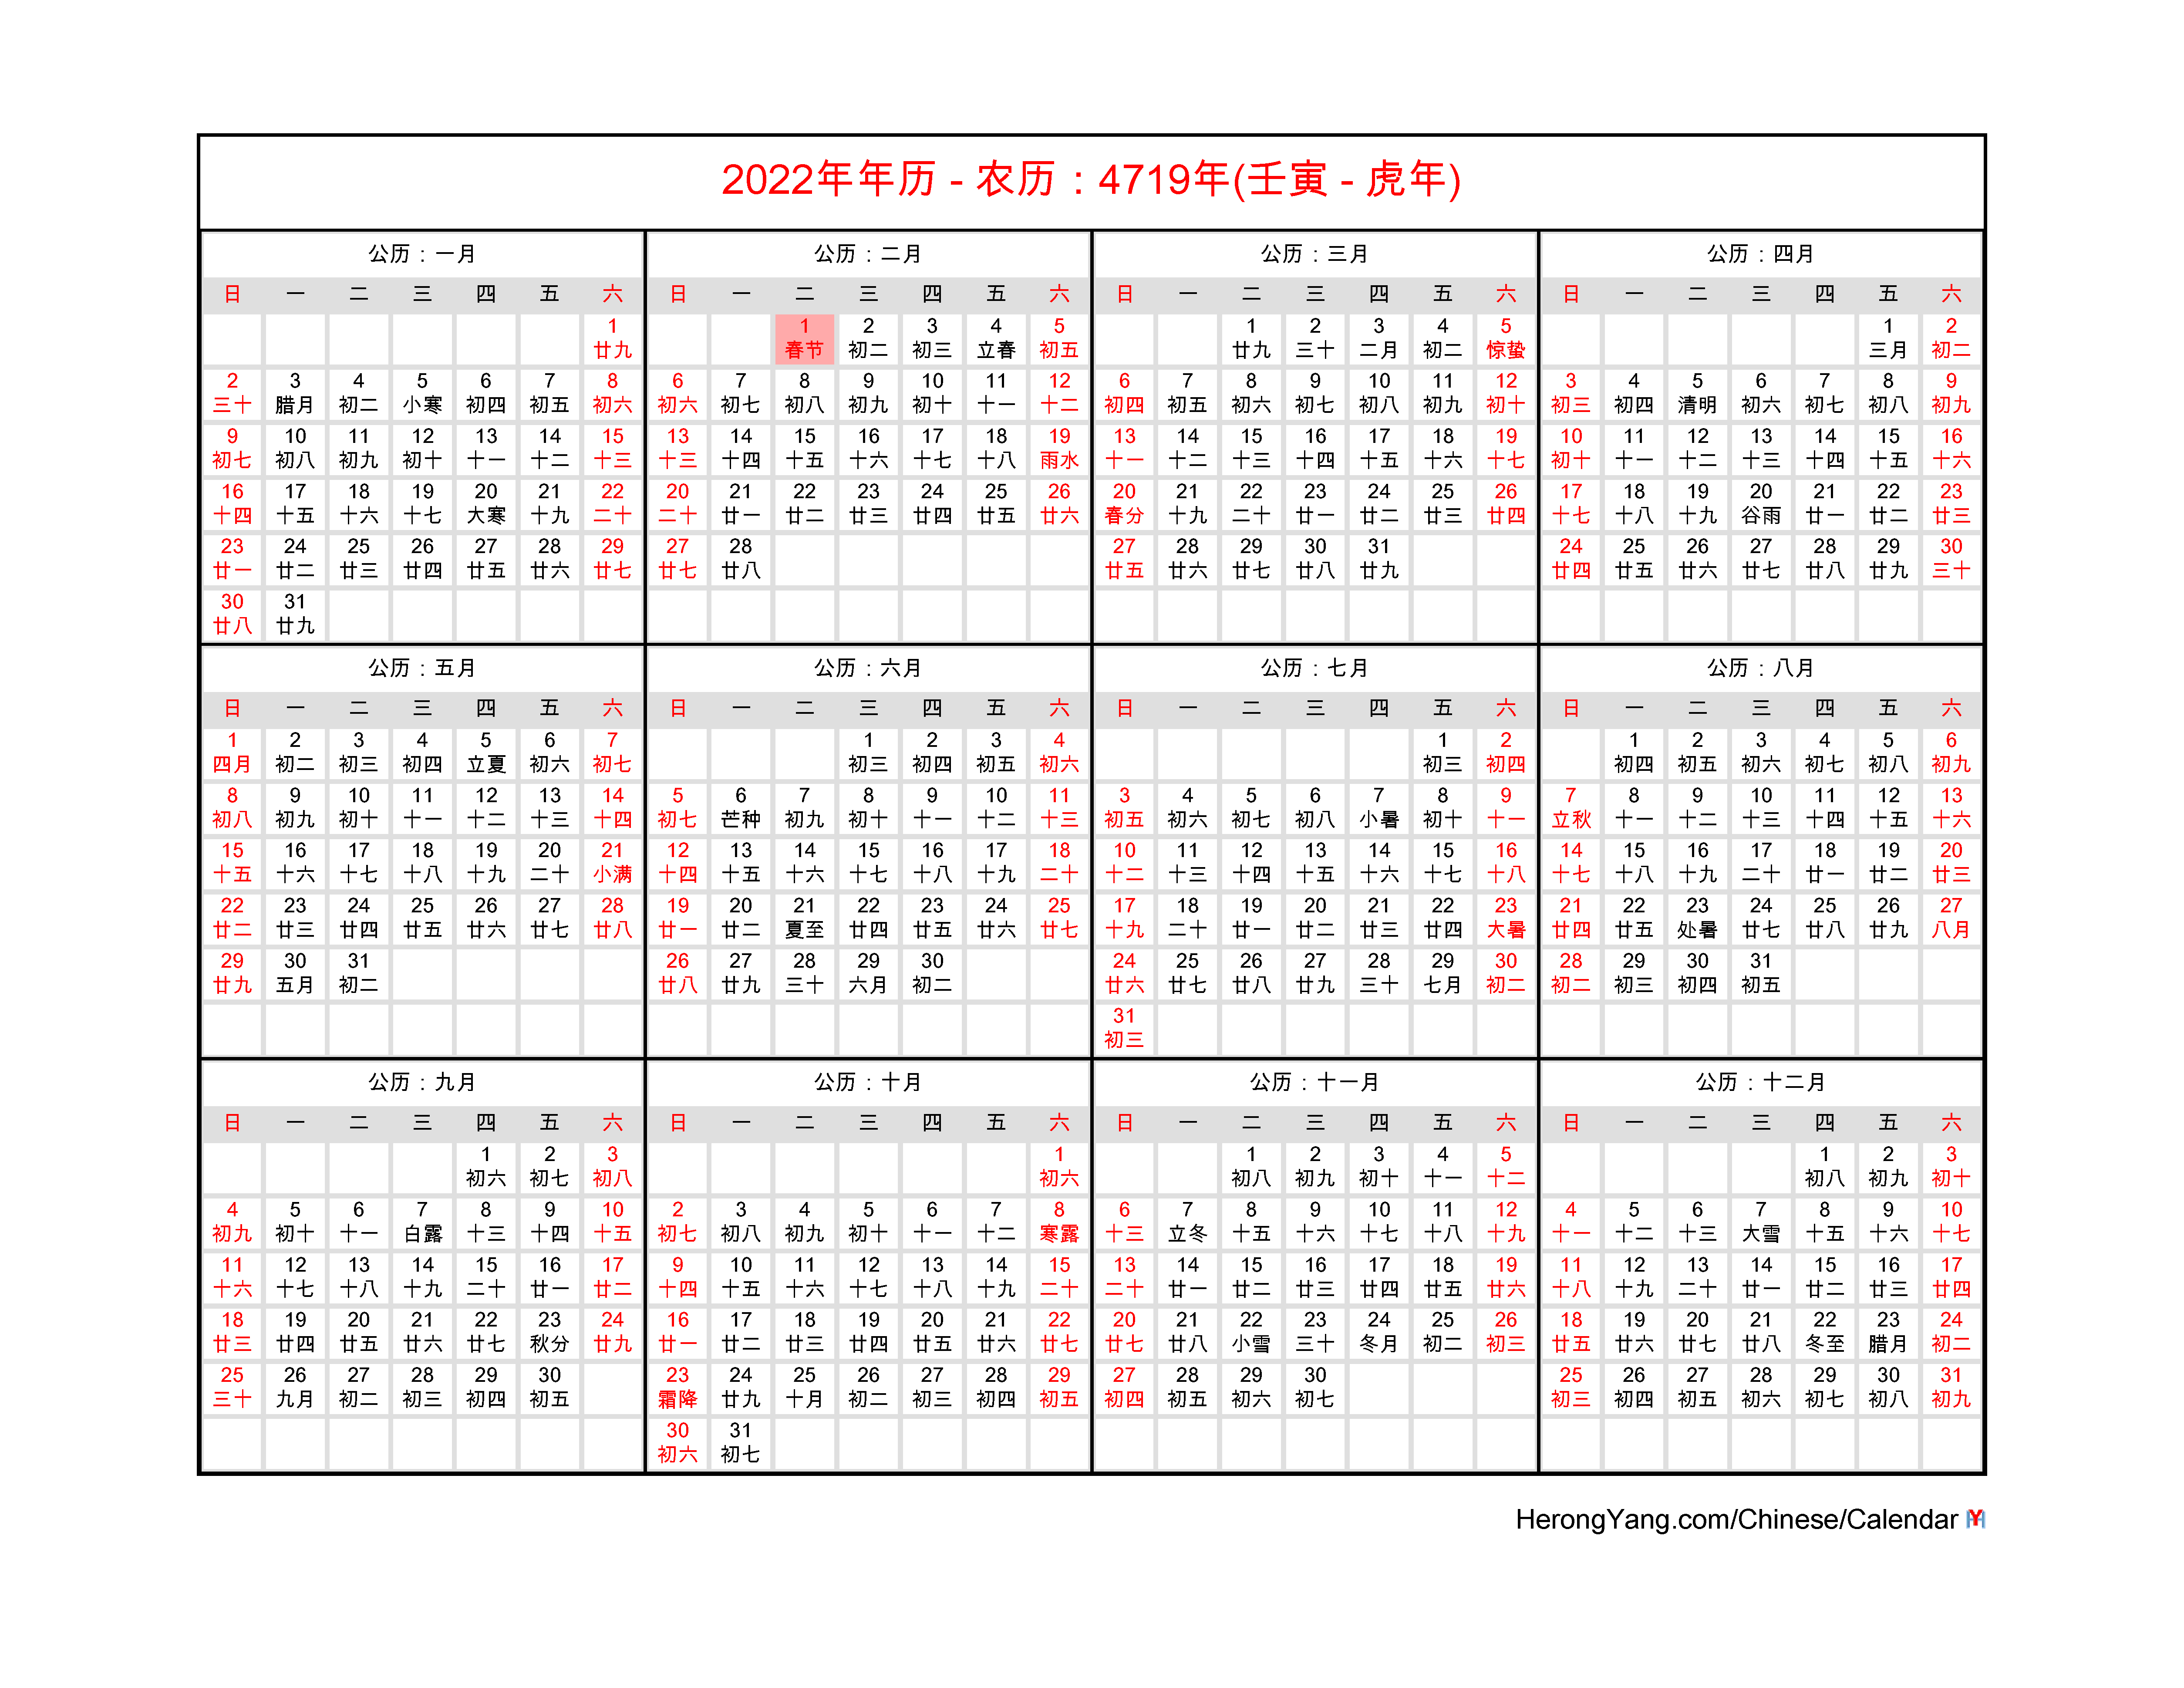 December 2022 Calendar Almanac Calendar Signs 2022